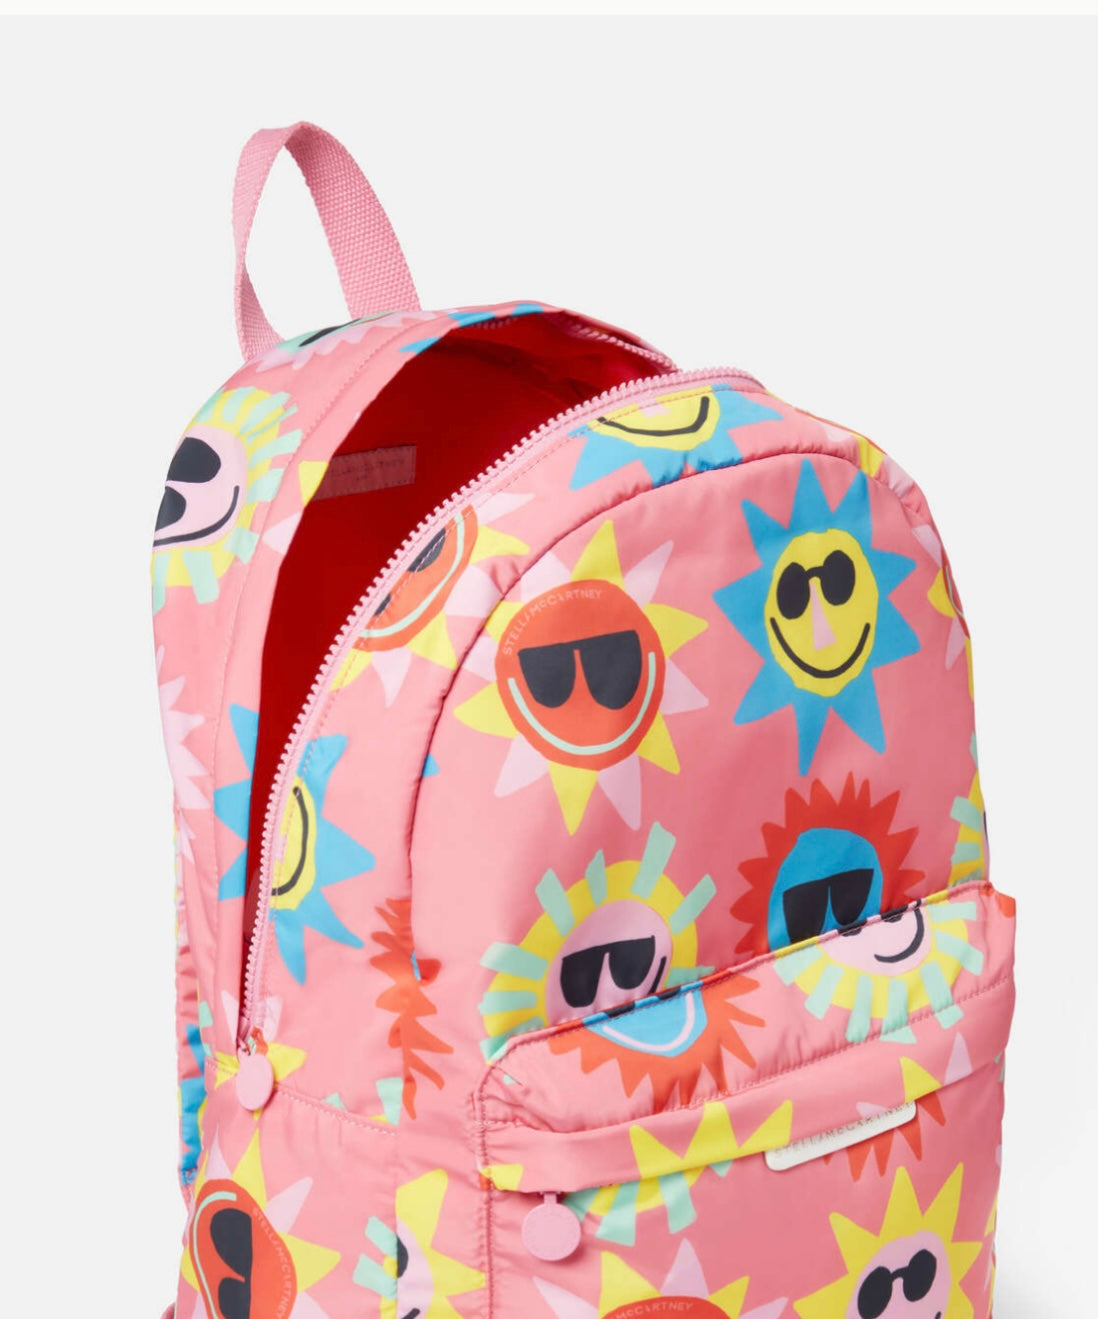 Stella McCartney Girl's Cool Sun Graphic Backpack